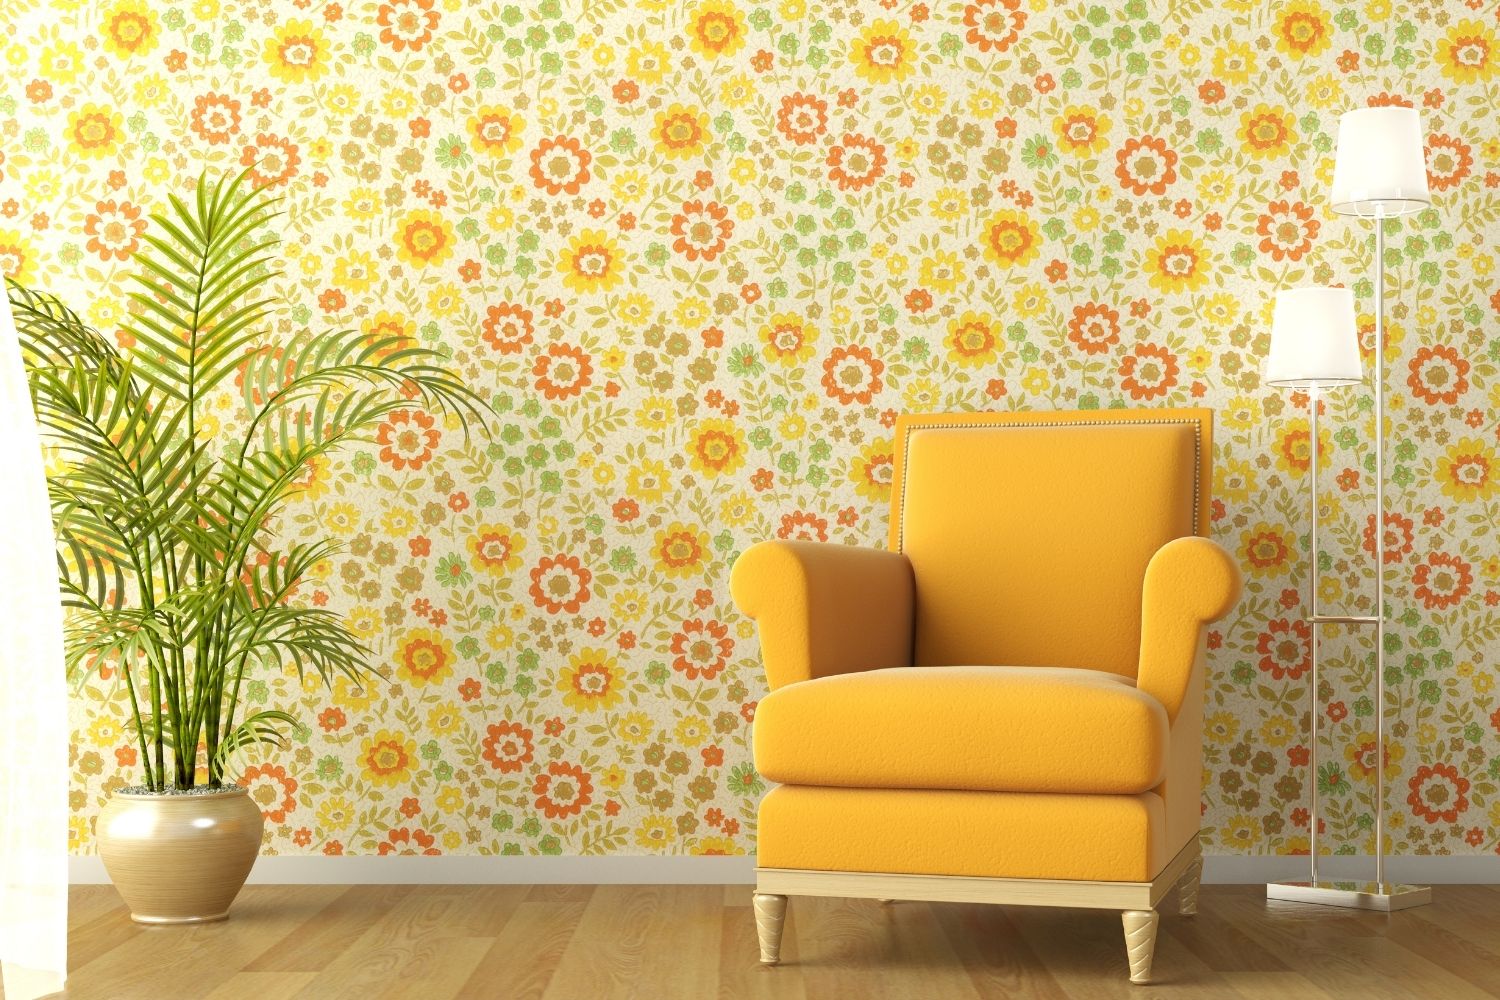 Choose Wallpaper For Your Living Room